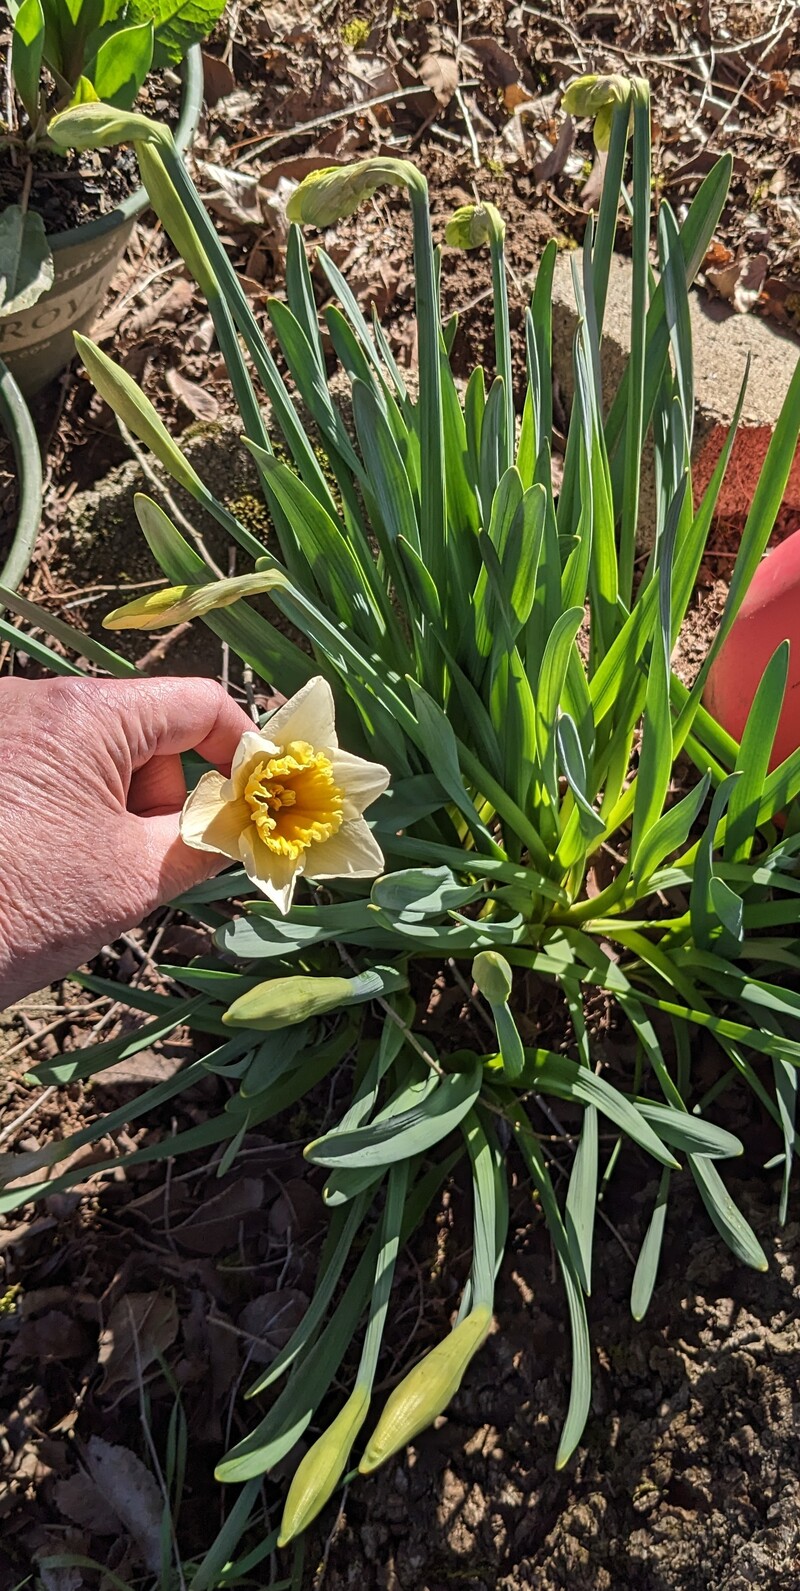 second daffodil